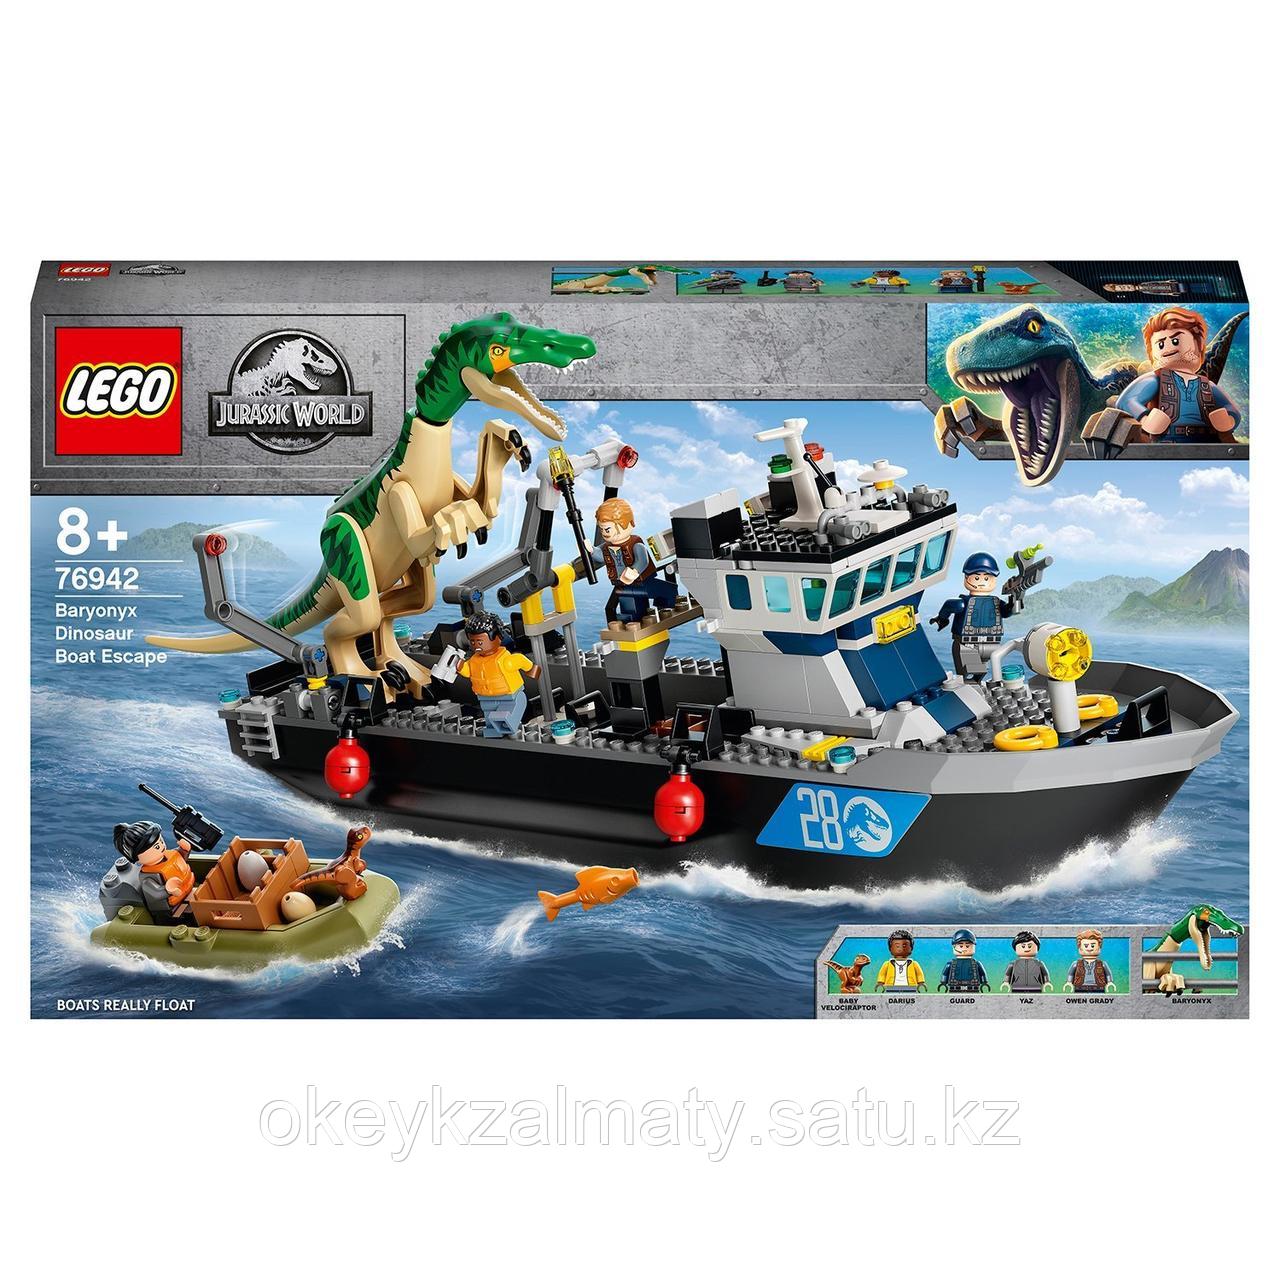 LEGO Jurassic World: Побег барионикса на катере 76942